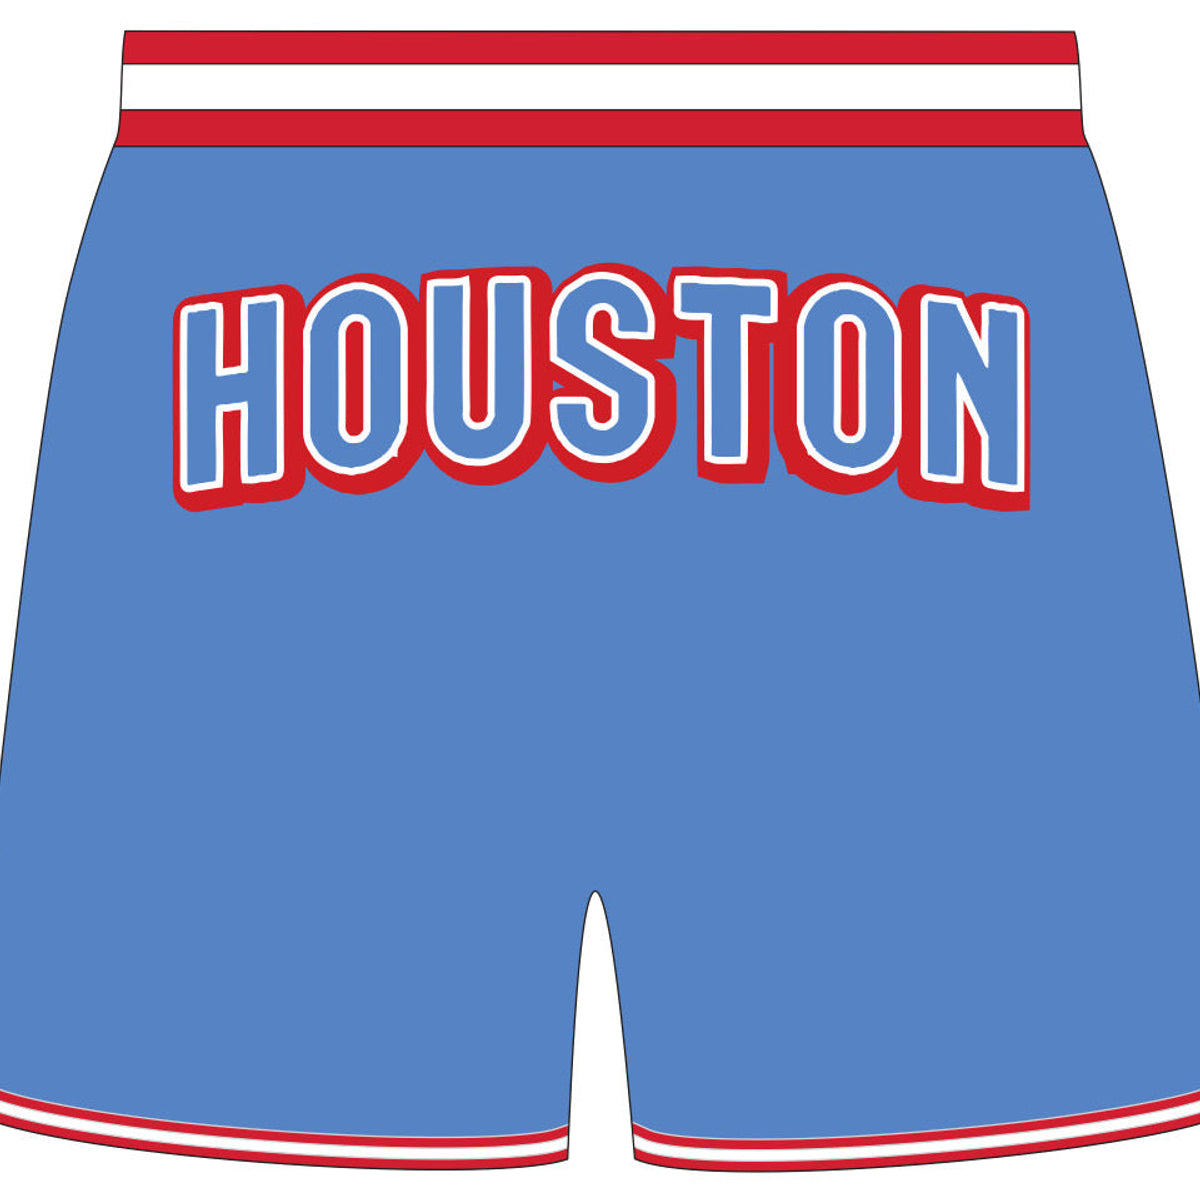 HOUSTON Oilers Basketball Shorts